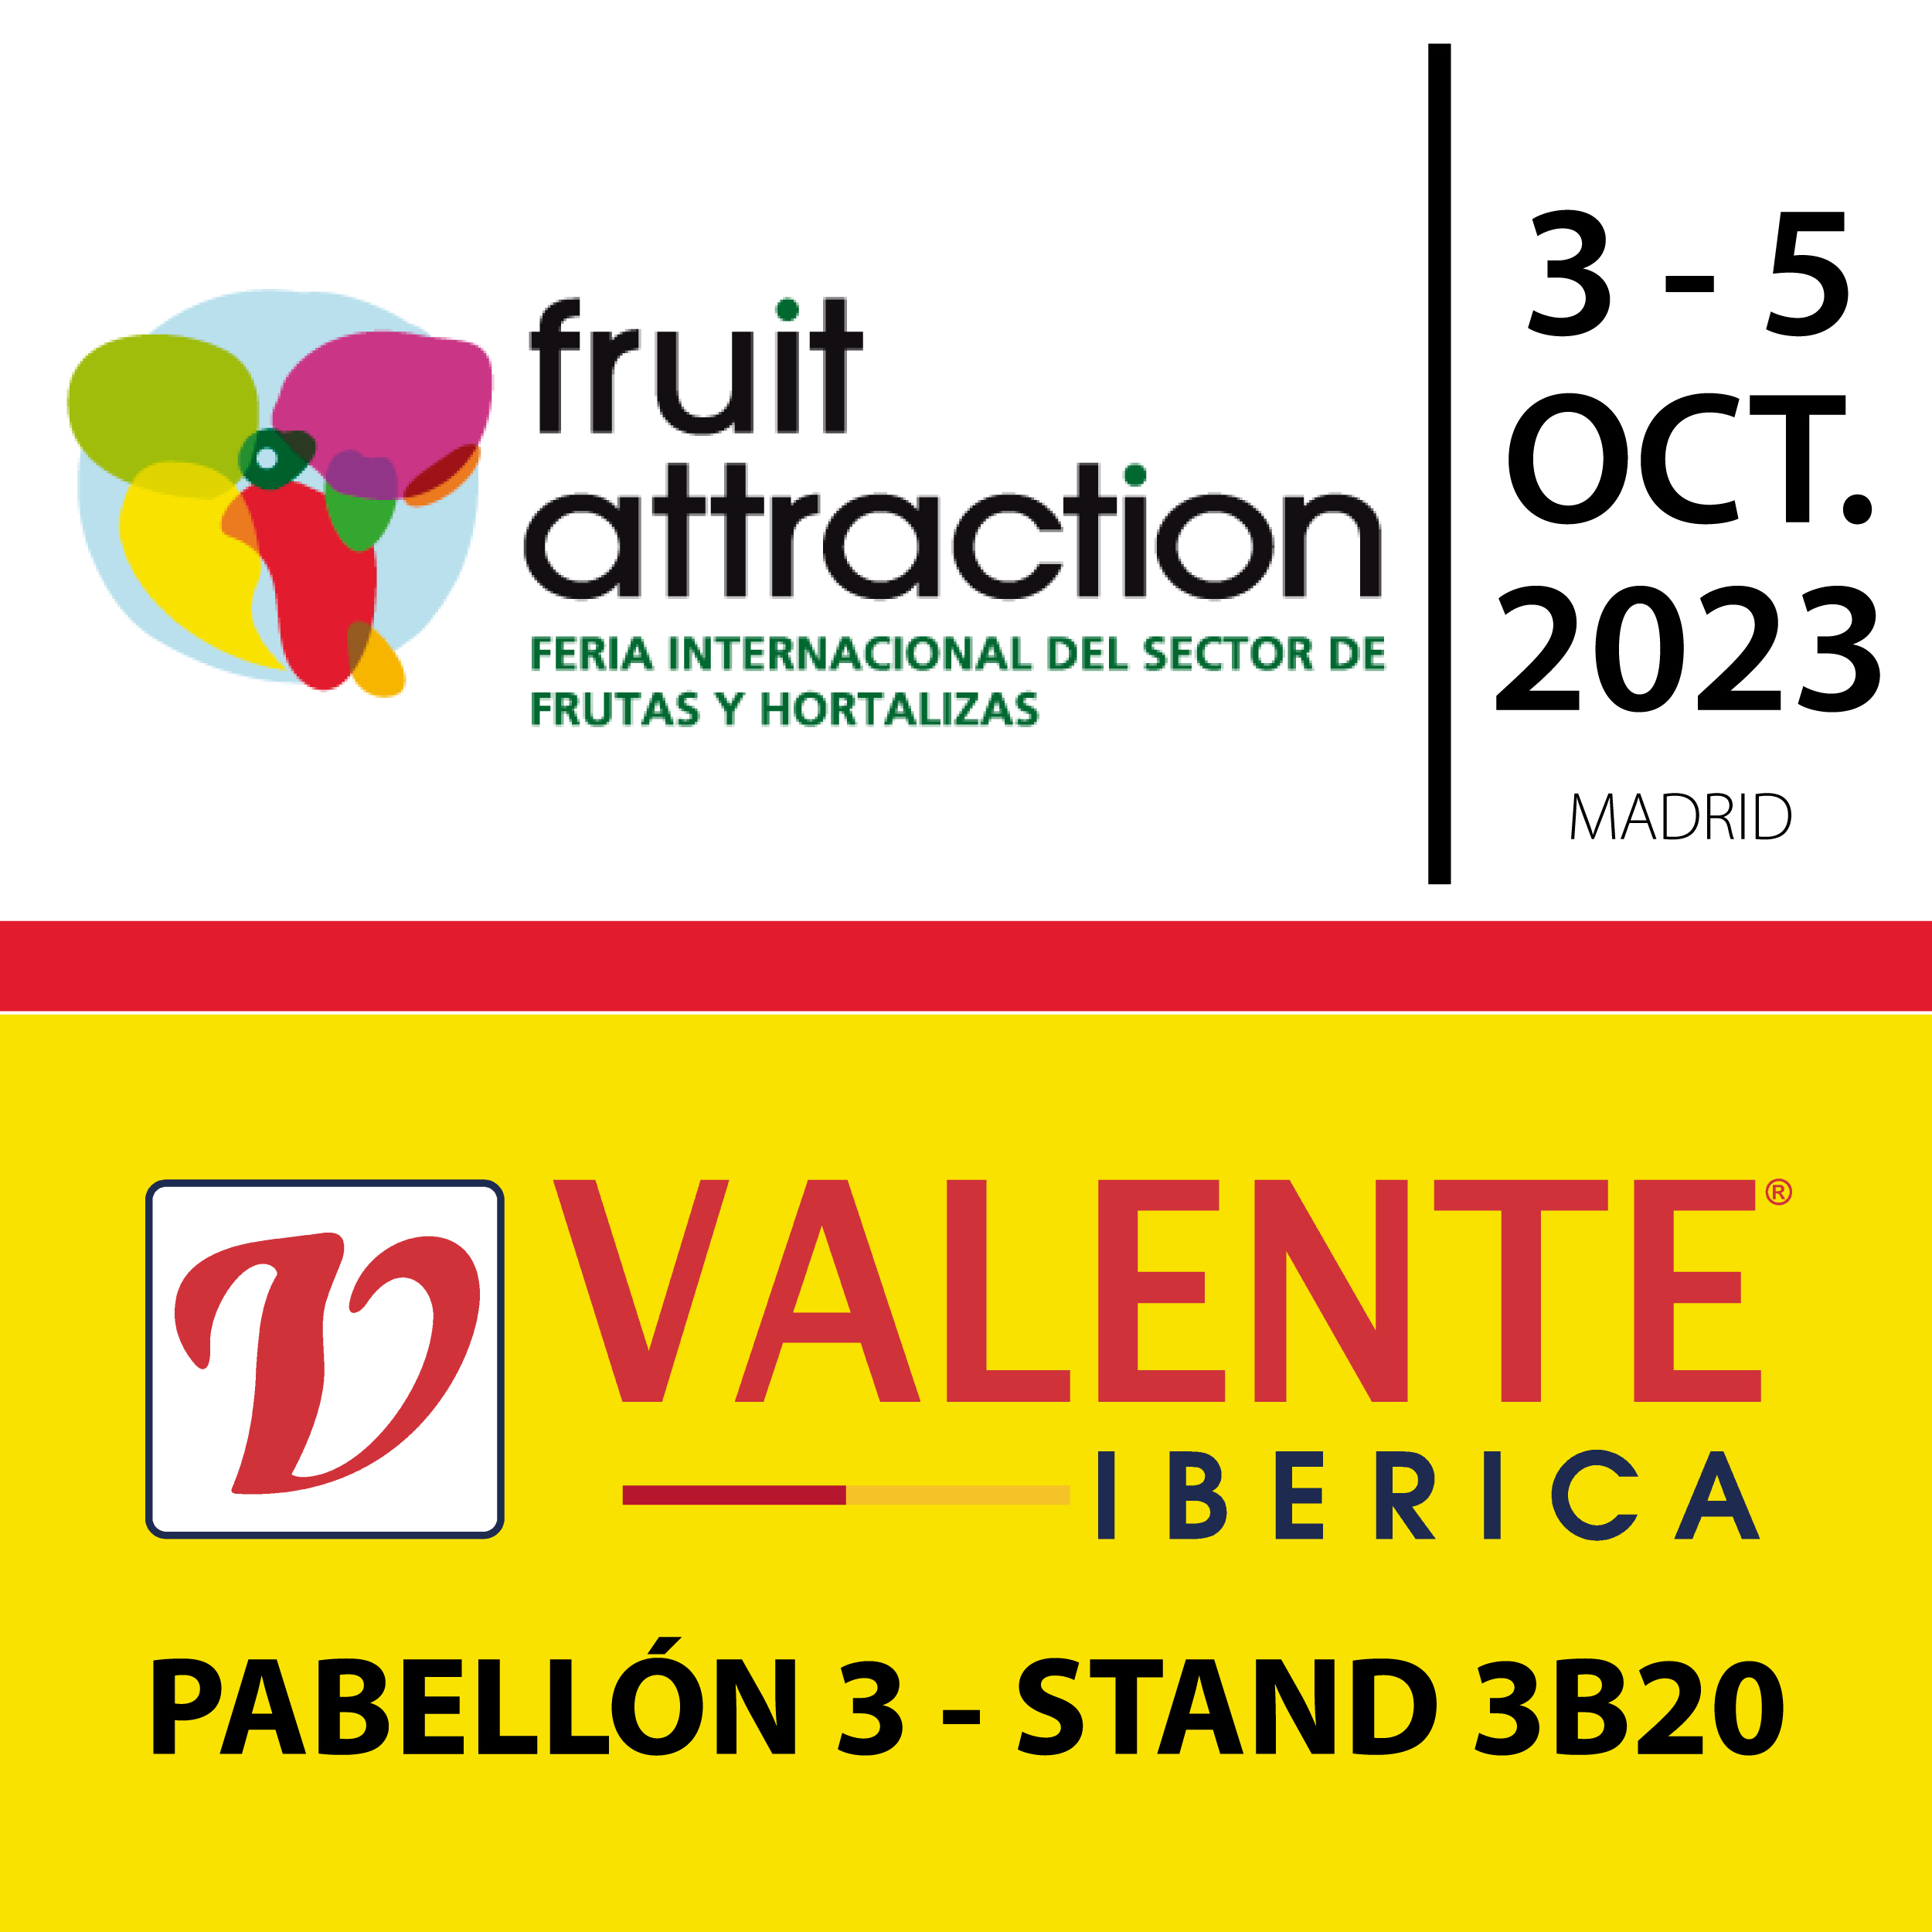 fruit attraction 2023 VALENTE IBERICA